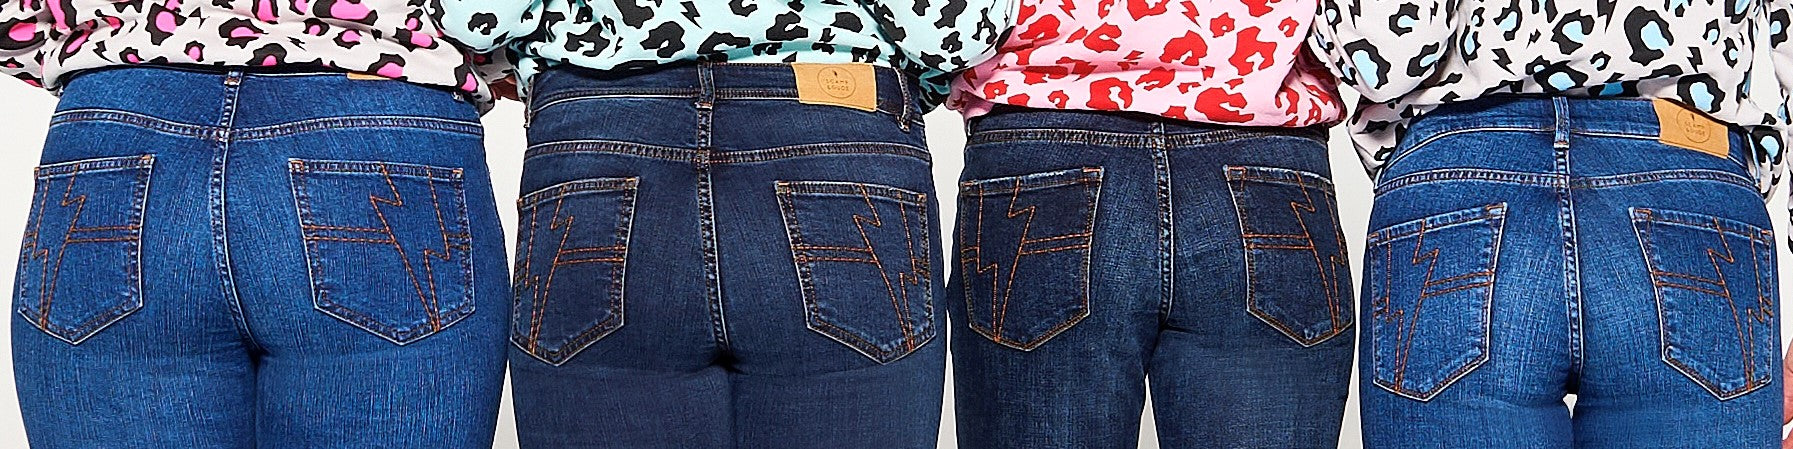 Sustainable Women's Jeans, Shop Ethical Denim